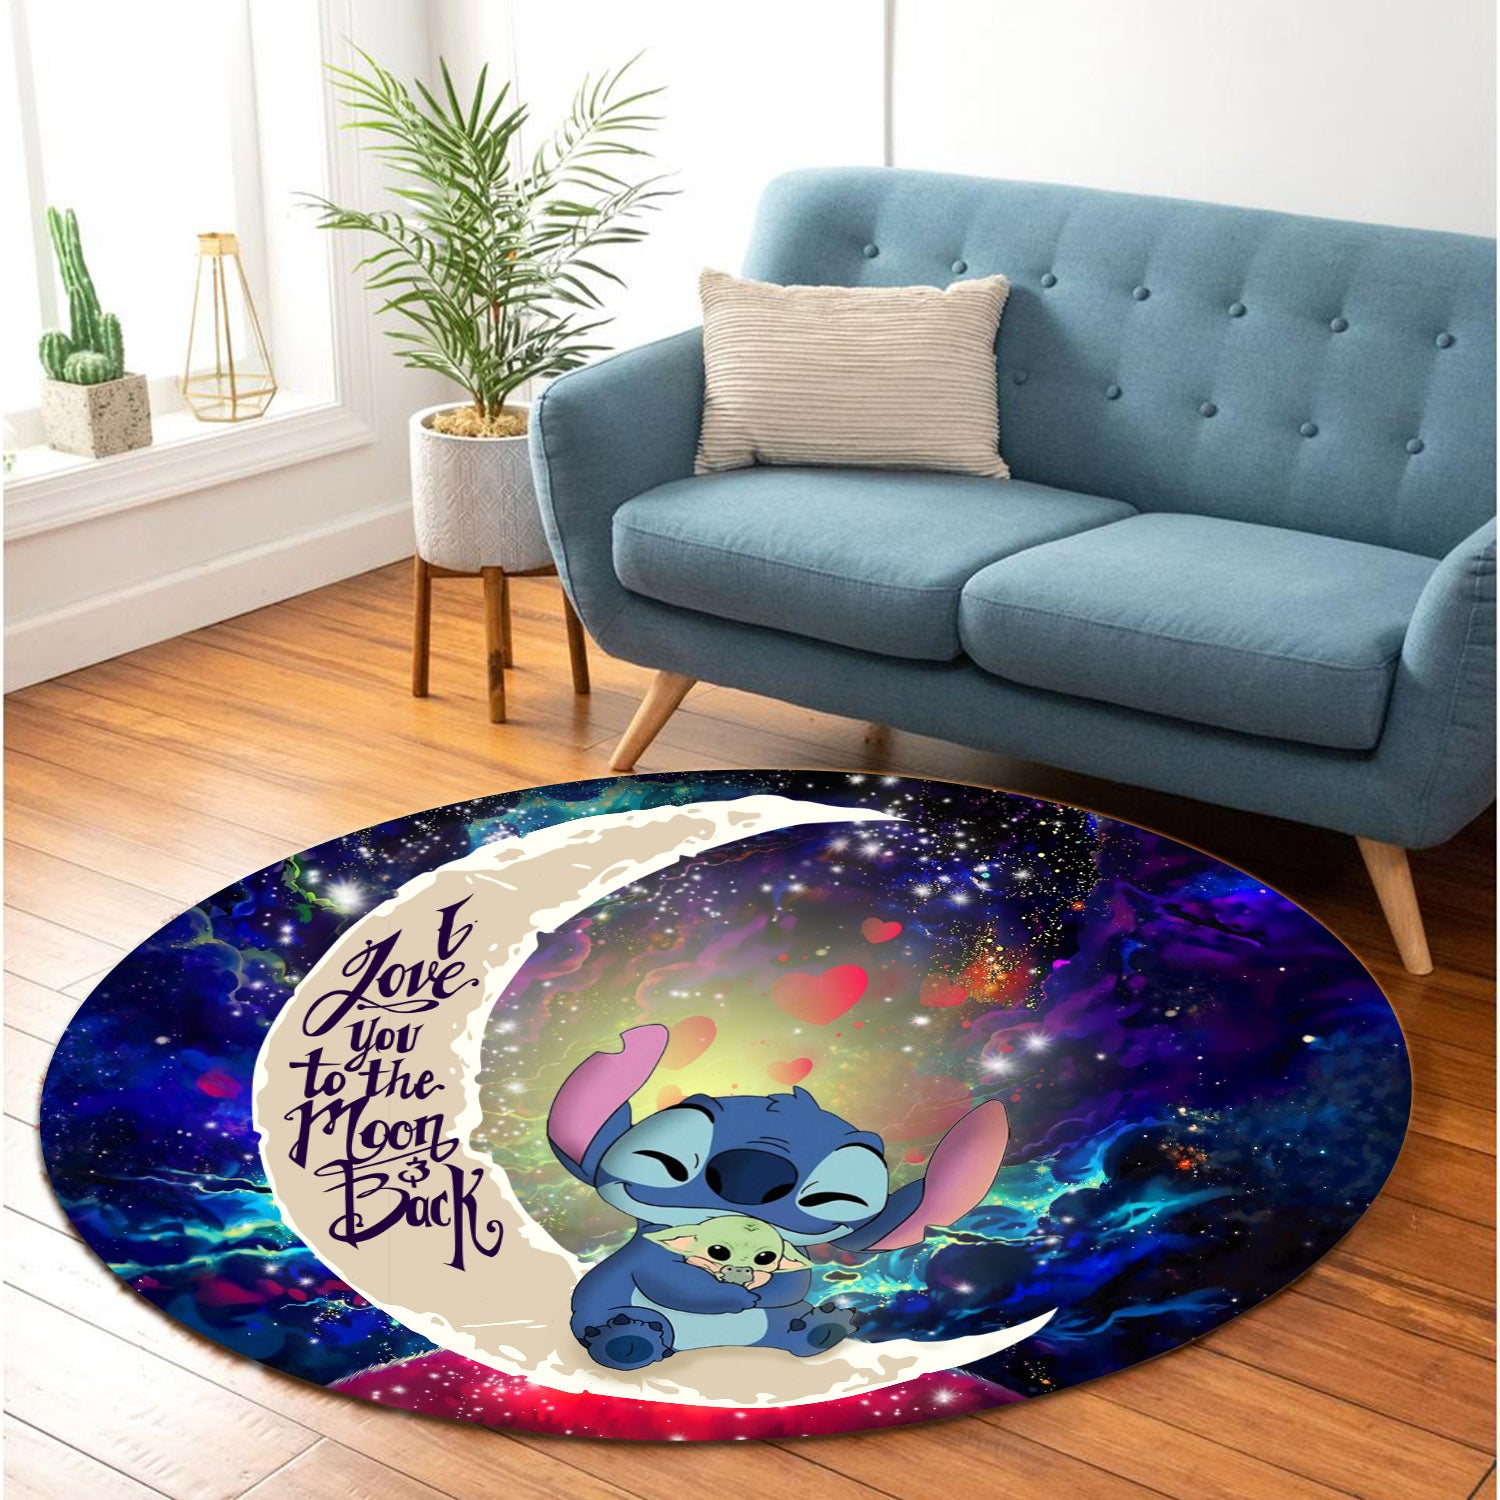 Stitch Hold Baby Yoda Love You To The Moon Galaxy Round Carpet Rug Bedroom Livingroom Home Decor Nearkii